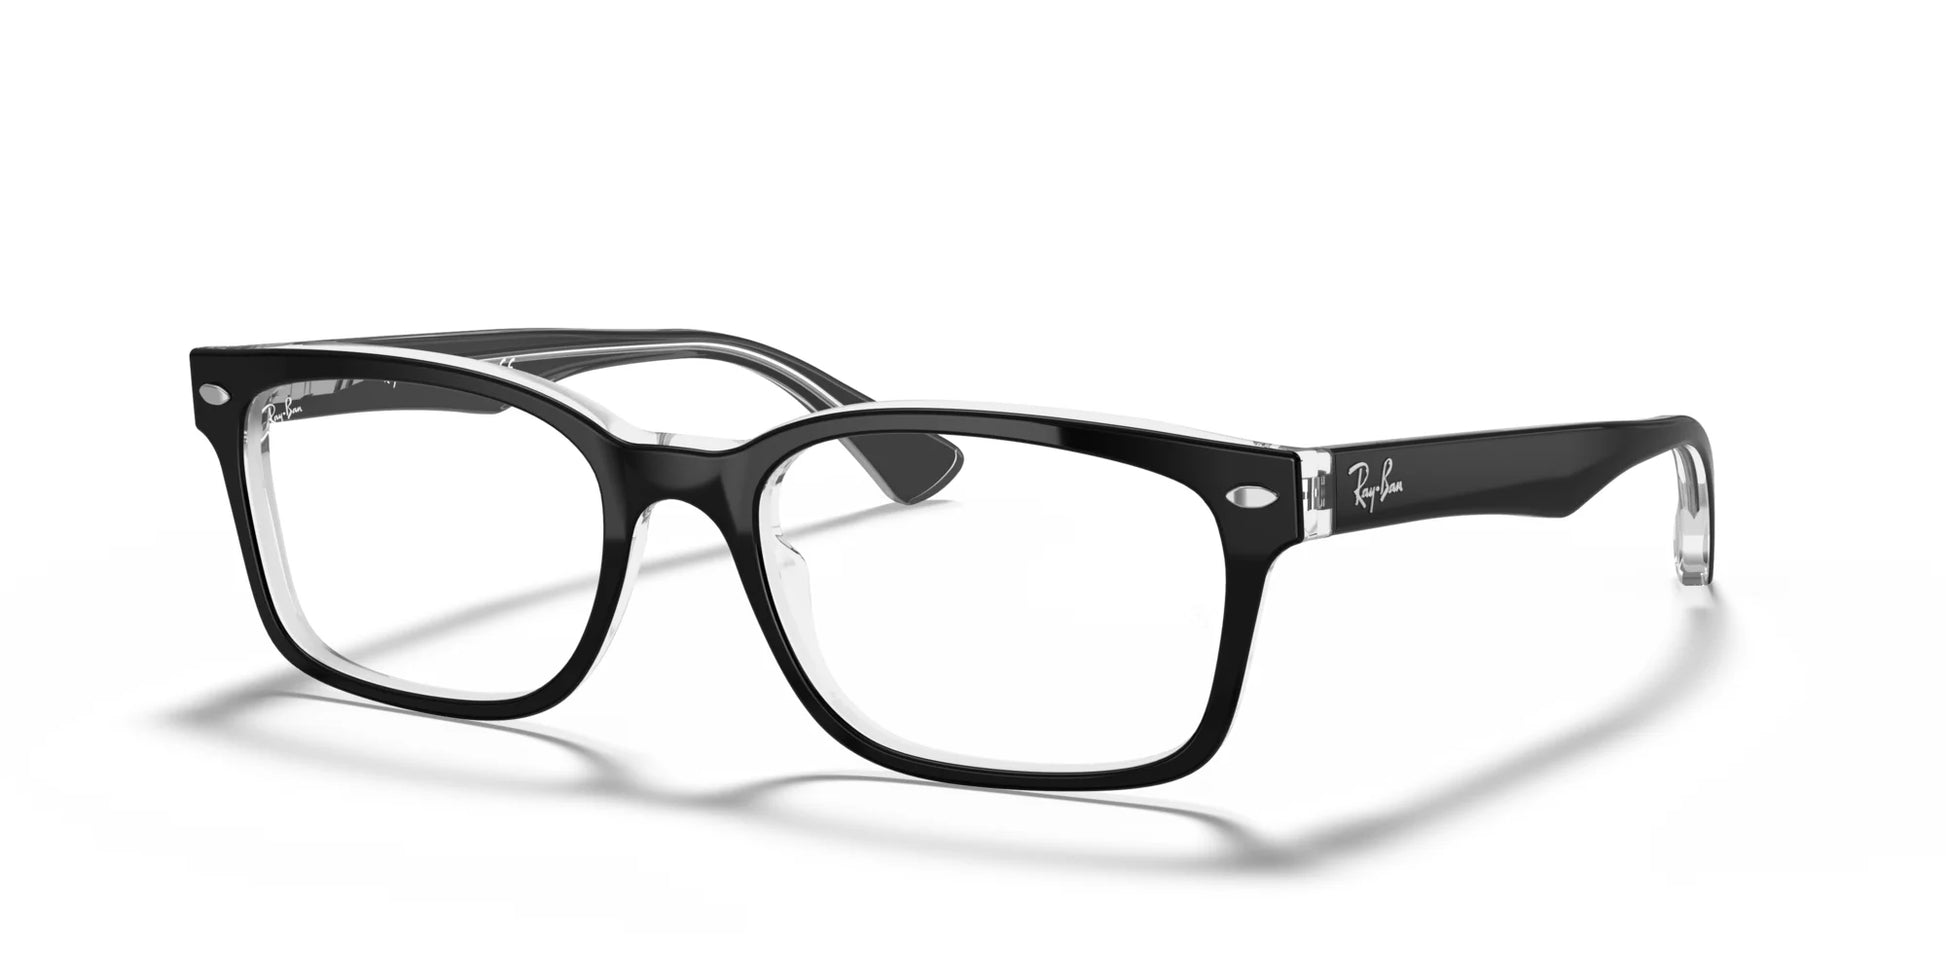 Ray-Ban RX5286 Eyeglasses Black On Transparent / Clear